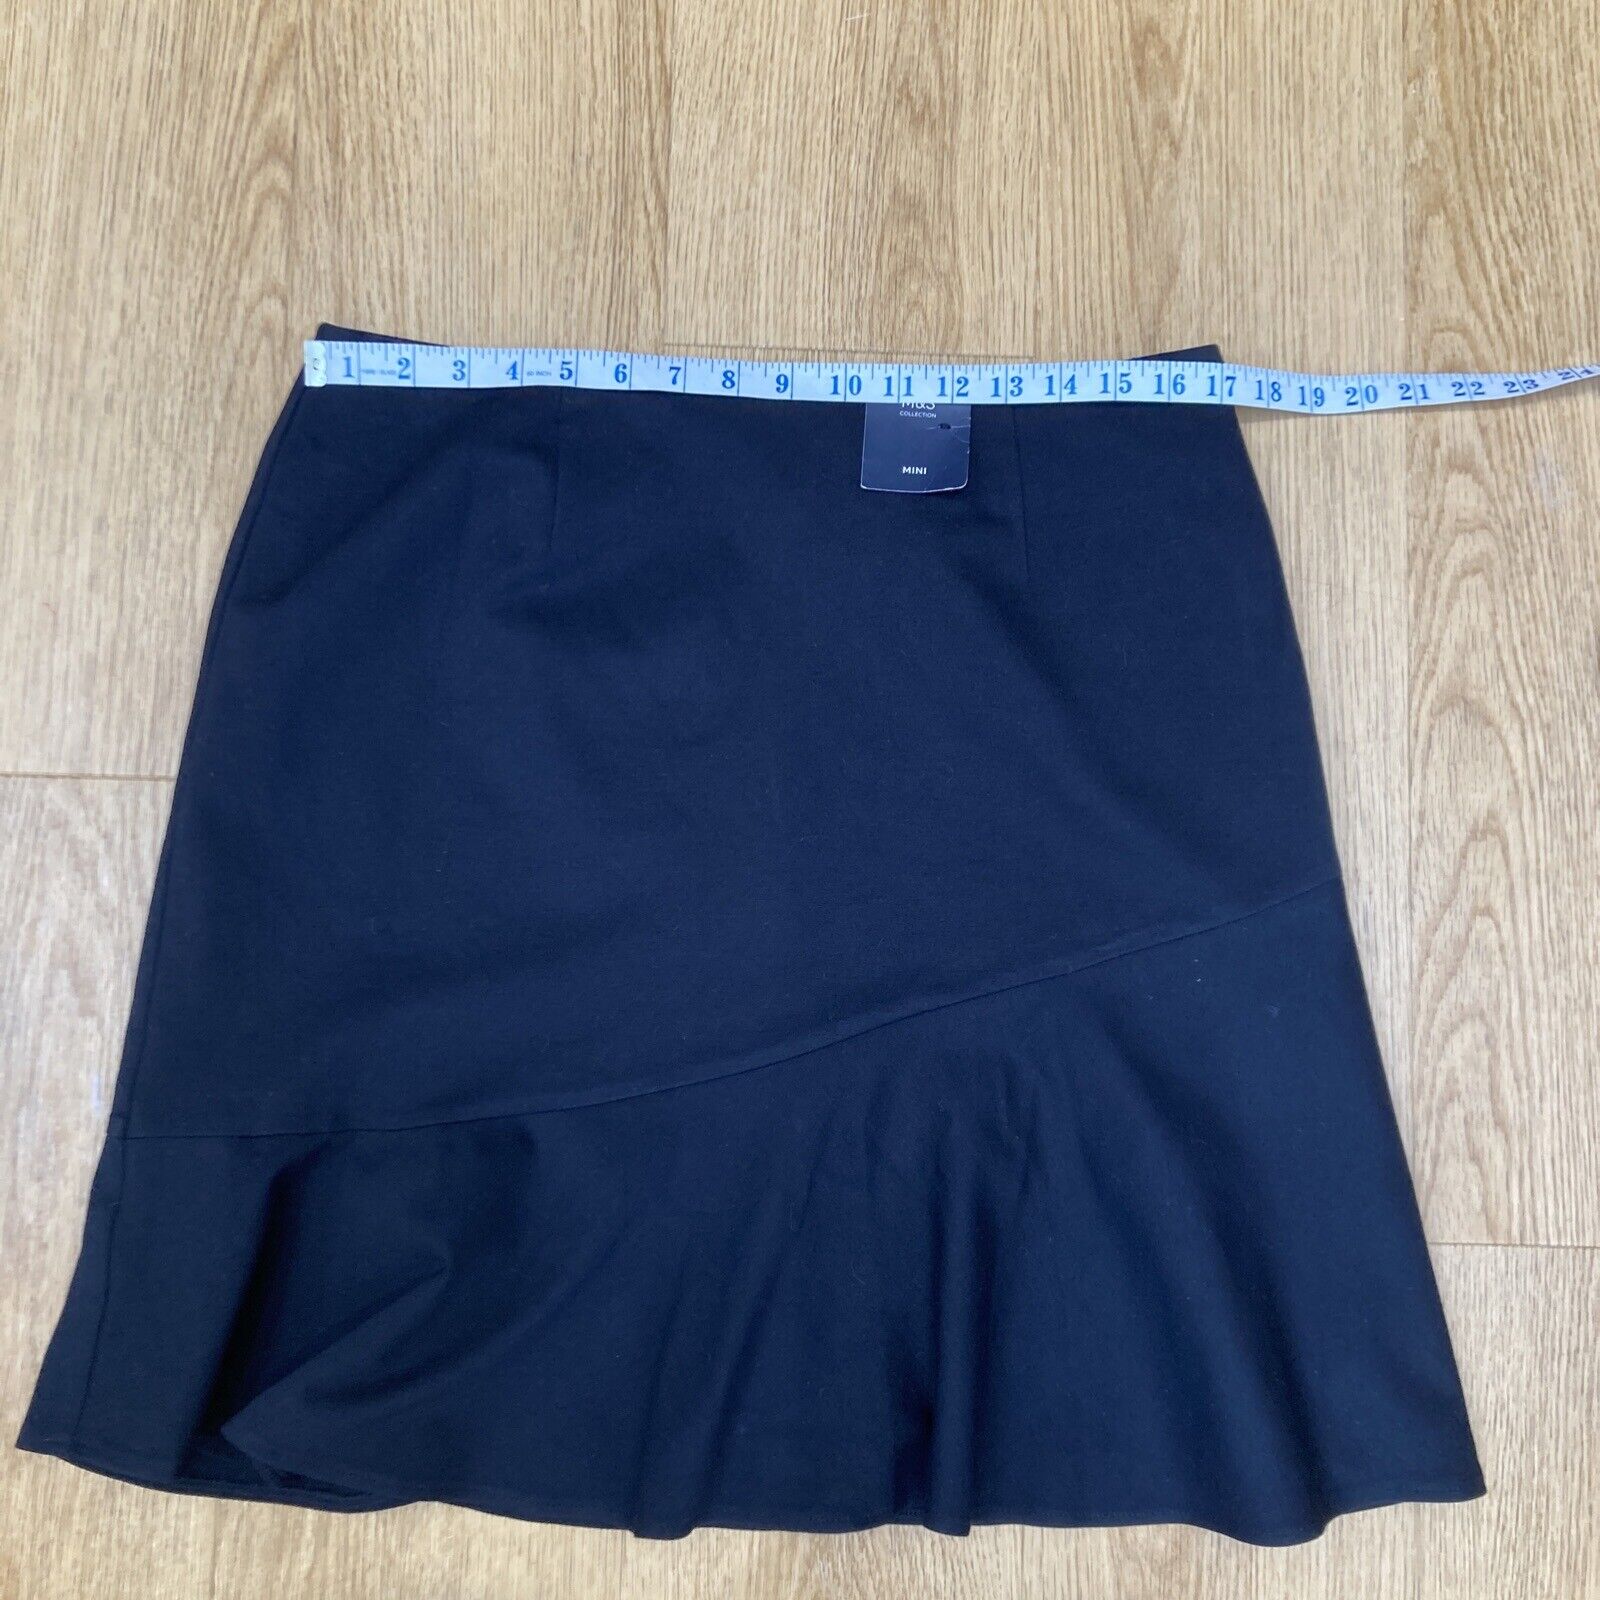 M & S Collection Black Flared Hem Lined Mini Skirt Size 16 - BNWT | eBay